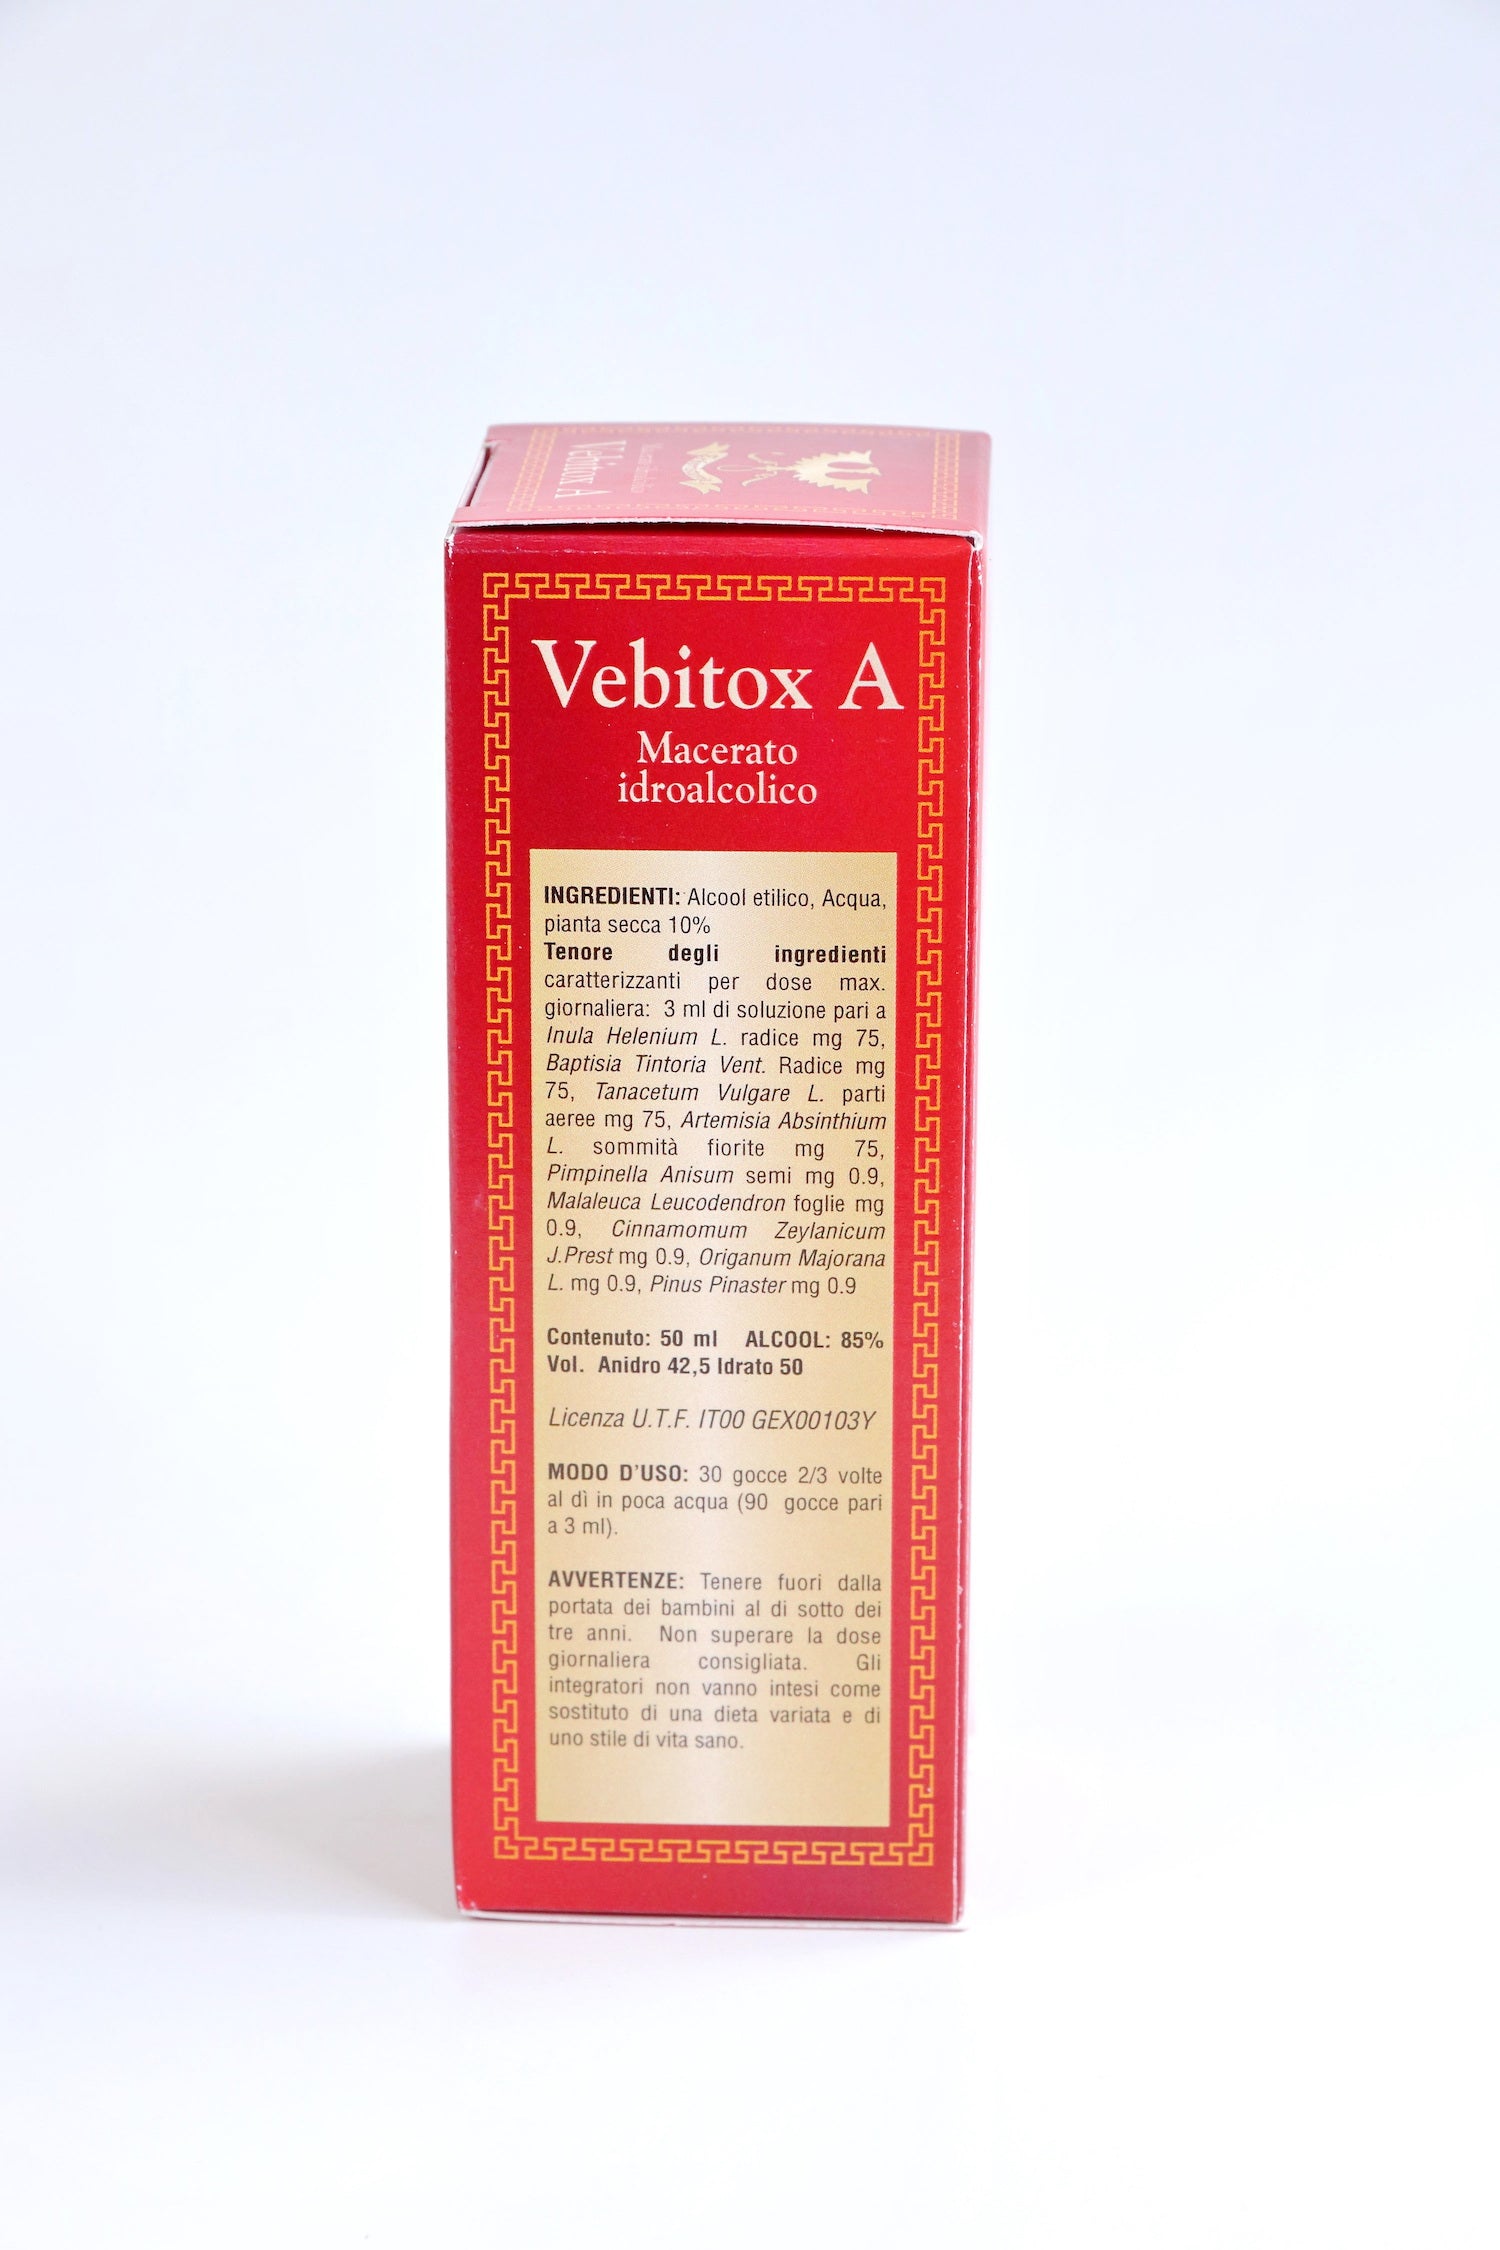 Vebitox A